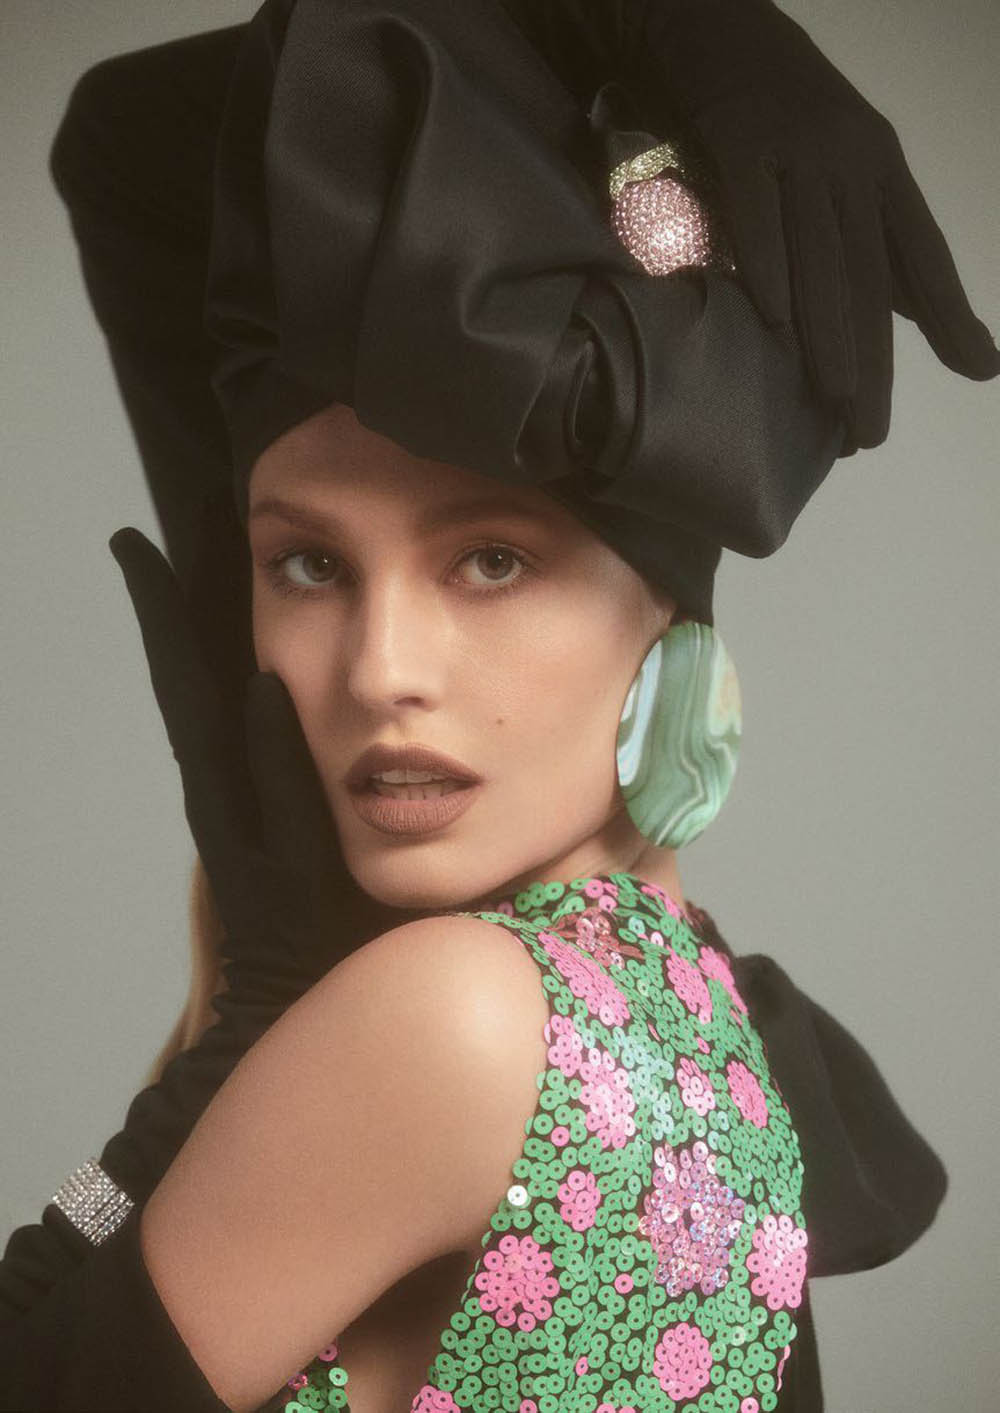 Nadja Bender by Zoey Grossman for Vogue Arabia July 2018